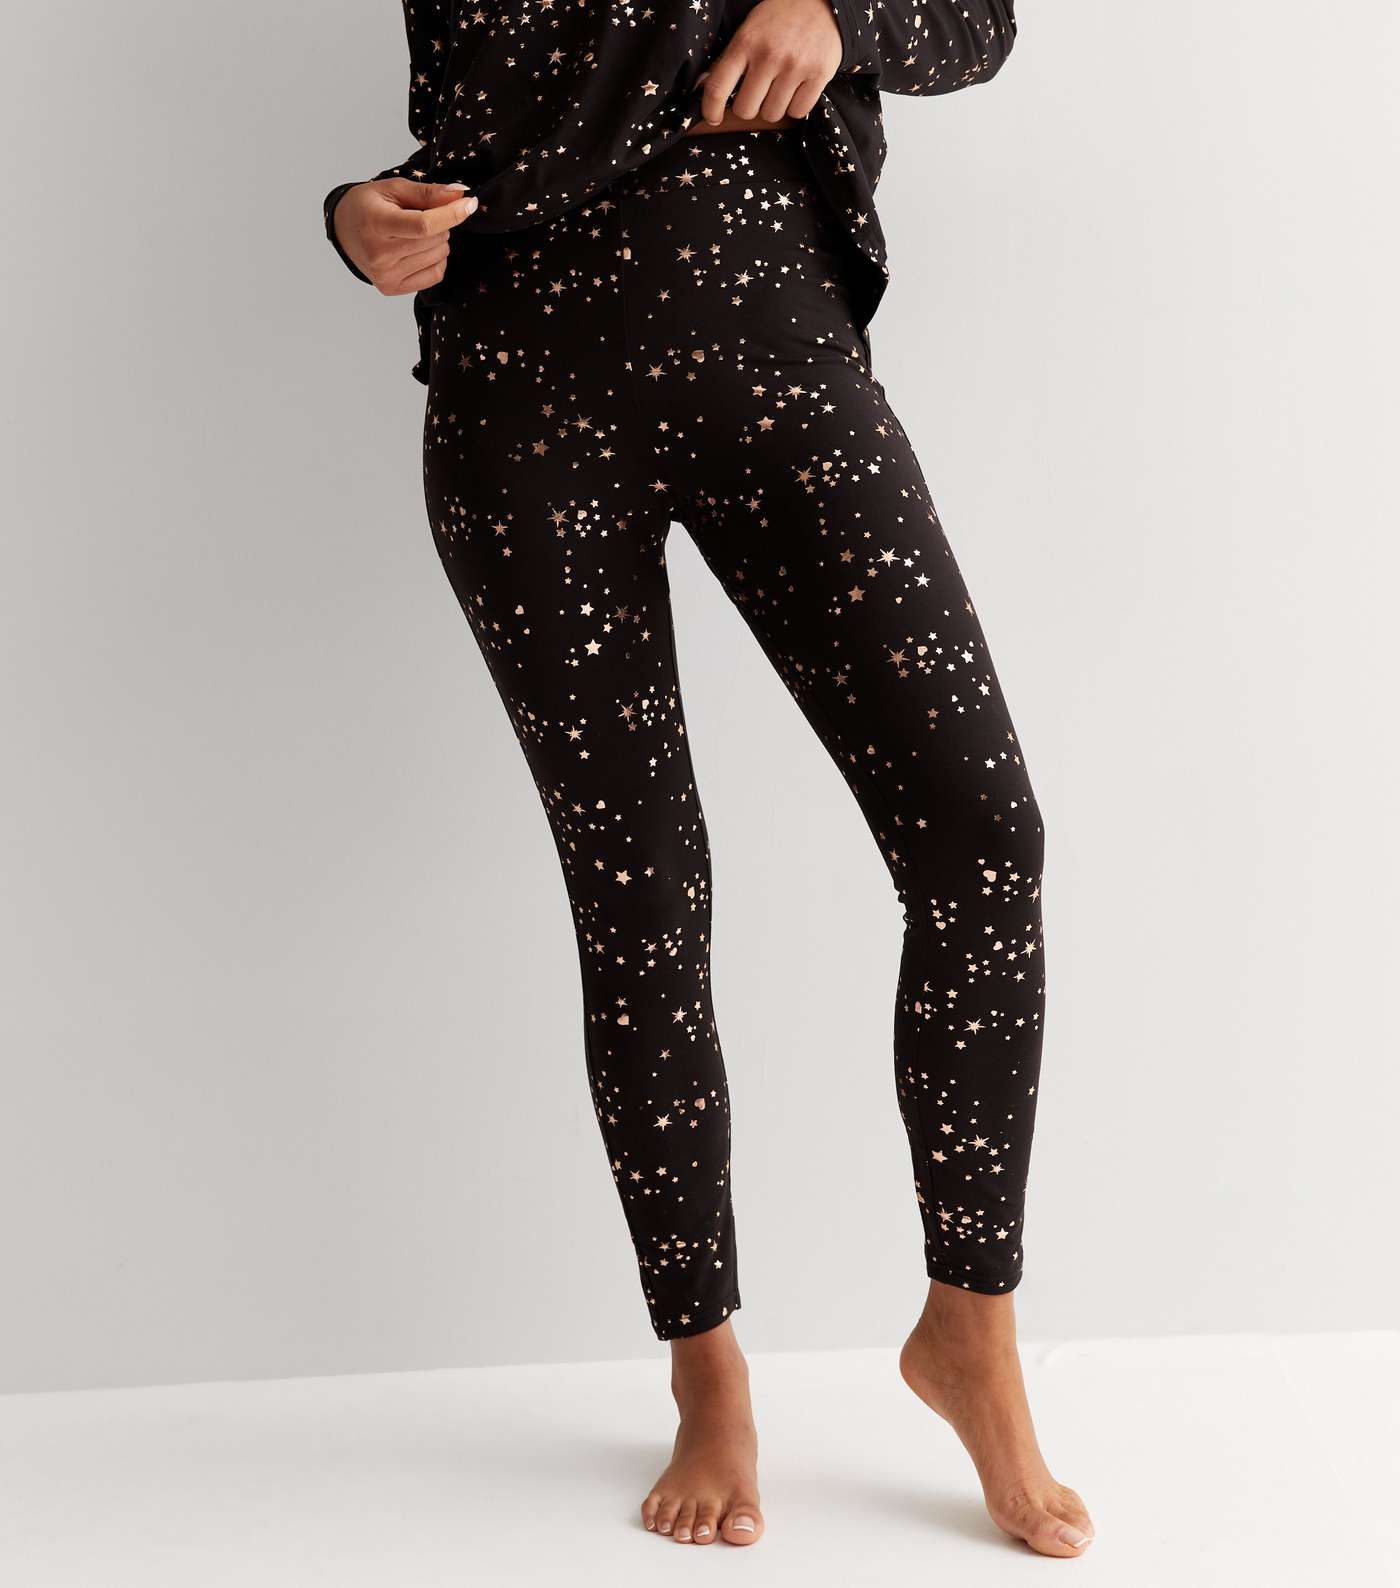 Petite Black Soft Touch Pyjama Set with Metallic Star Print Image 3